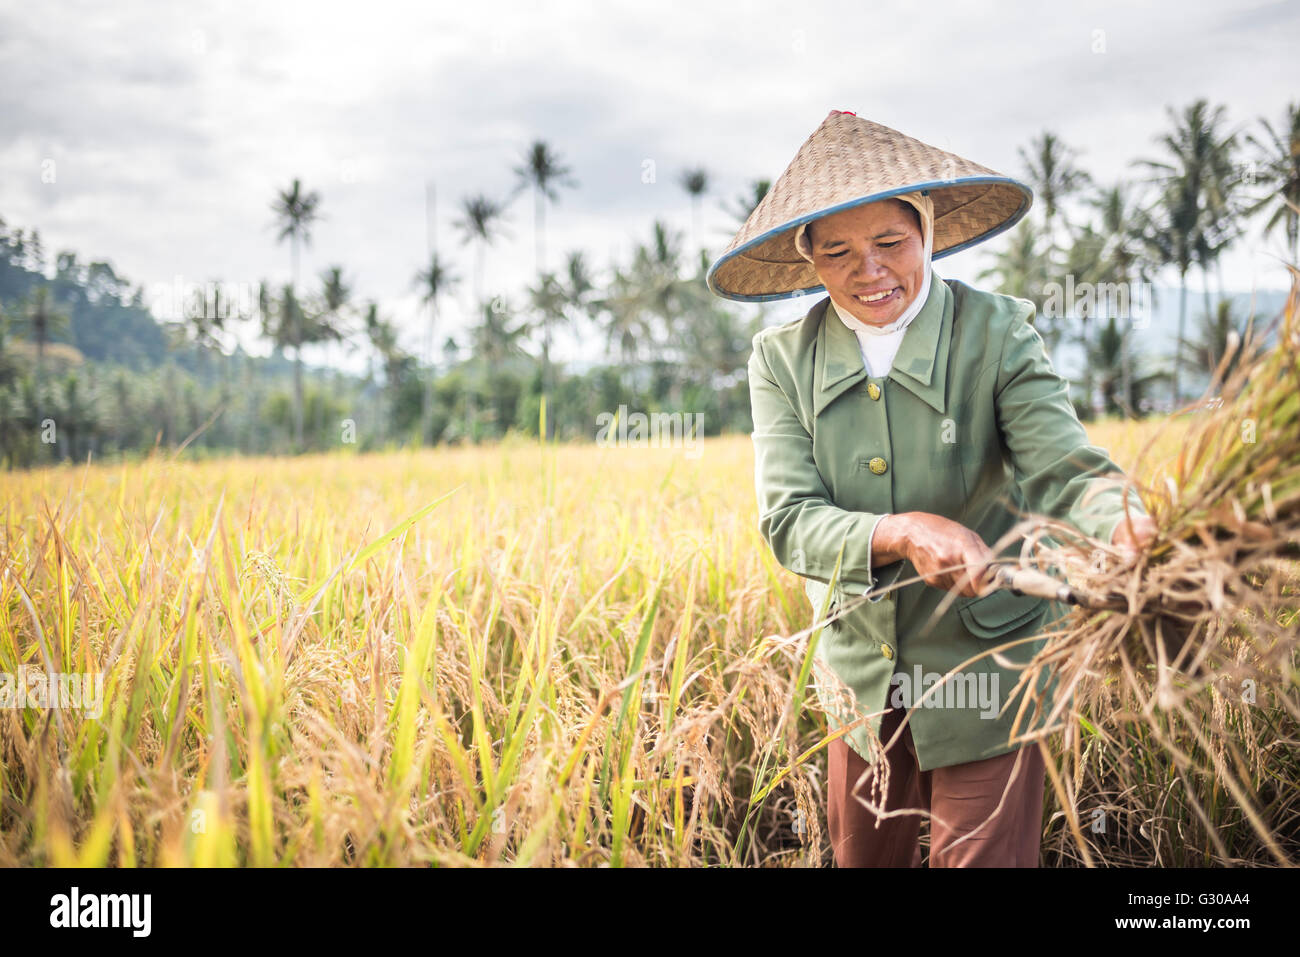 Farmers working in a rice paddy field, Bukittinggi, West Sumatra, Indonesia, Southeast Asia, Asia Stock Photo